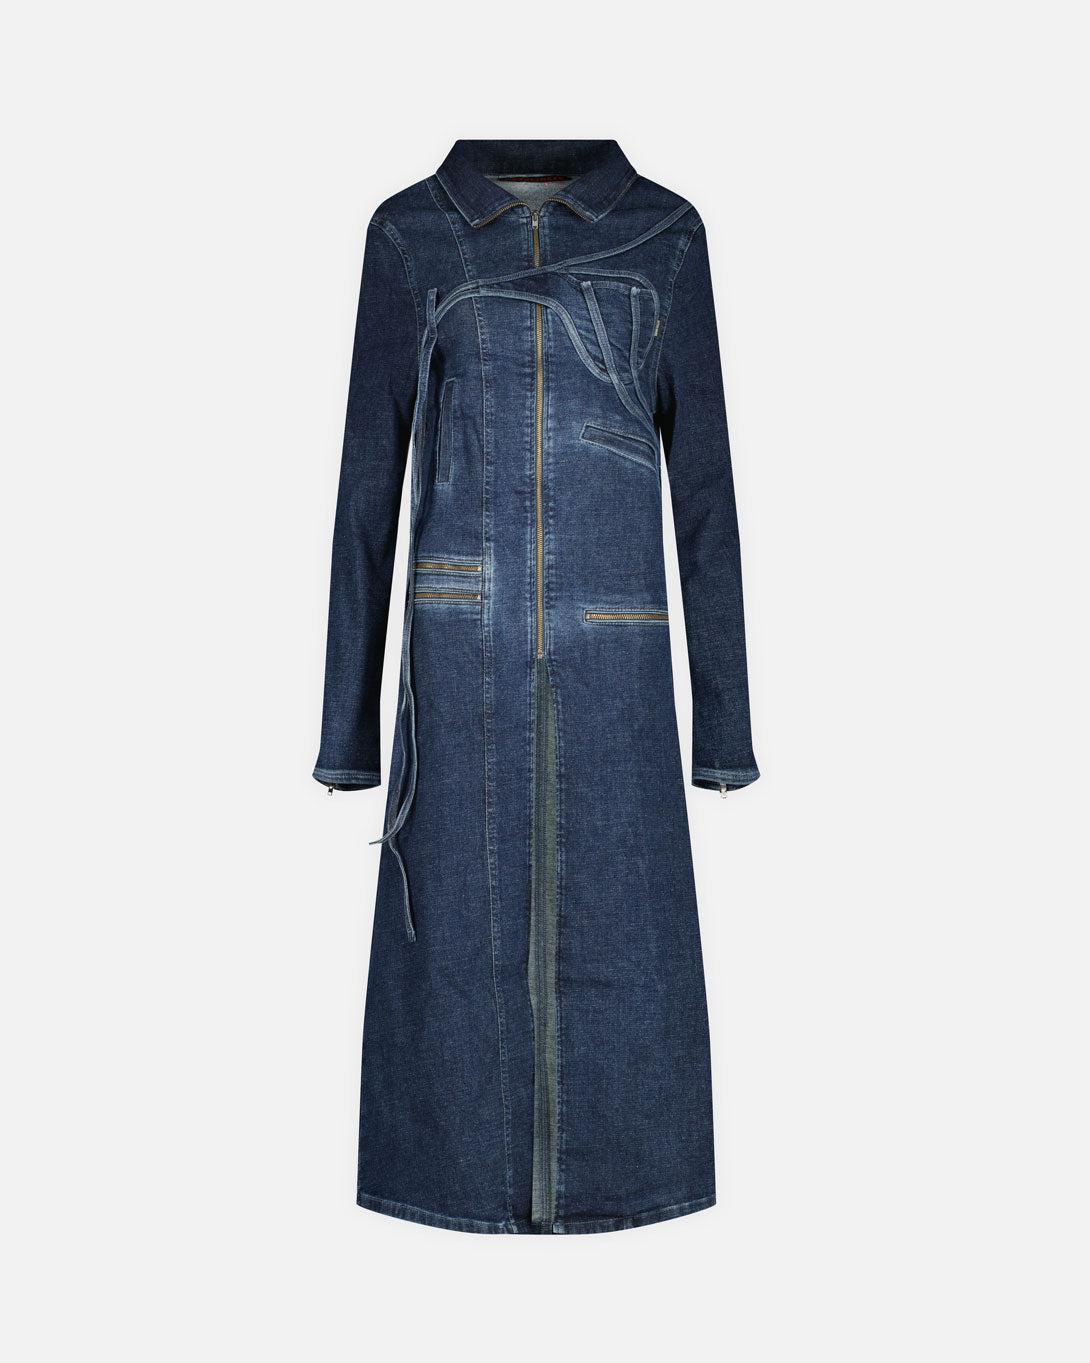 Denim Fitted Coat - Coats & Jackets - Ottolinger - Elevastor